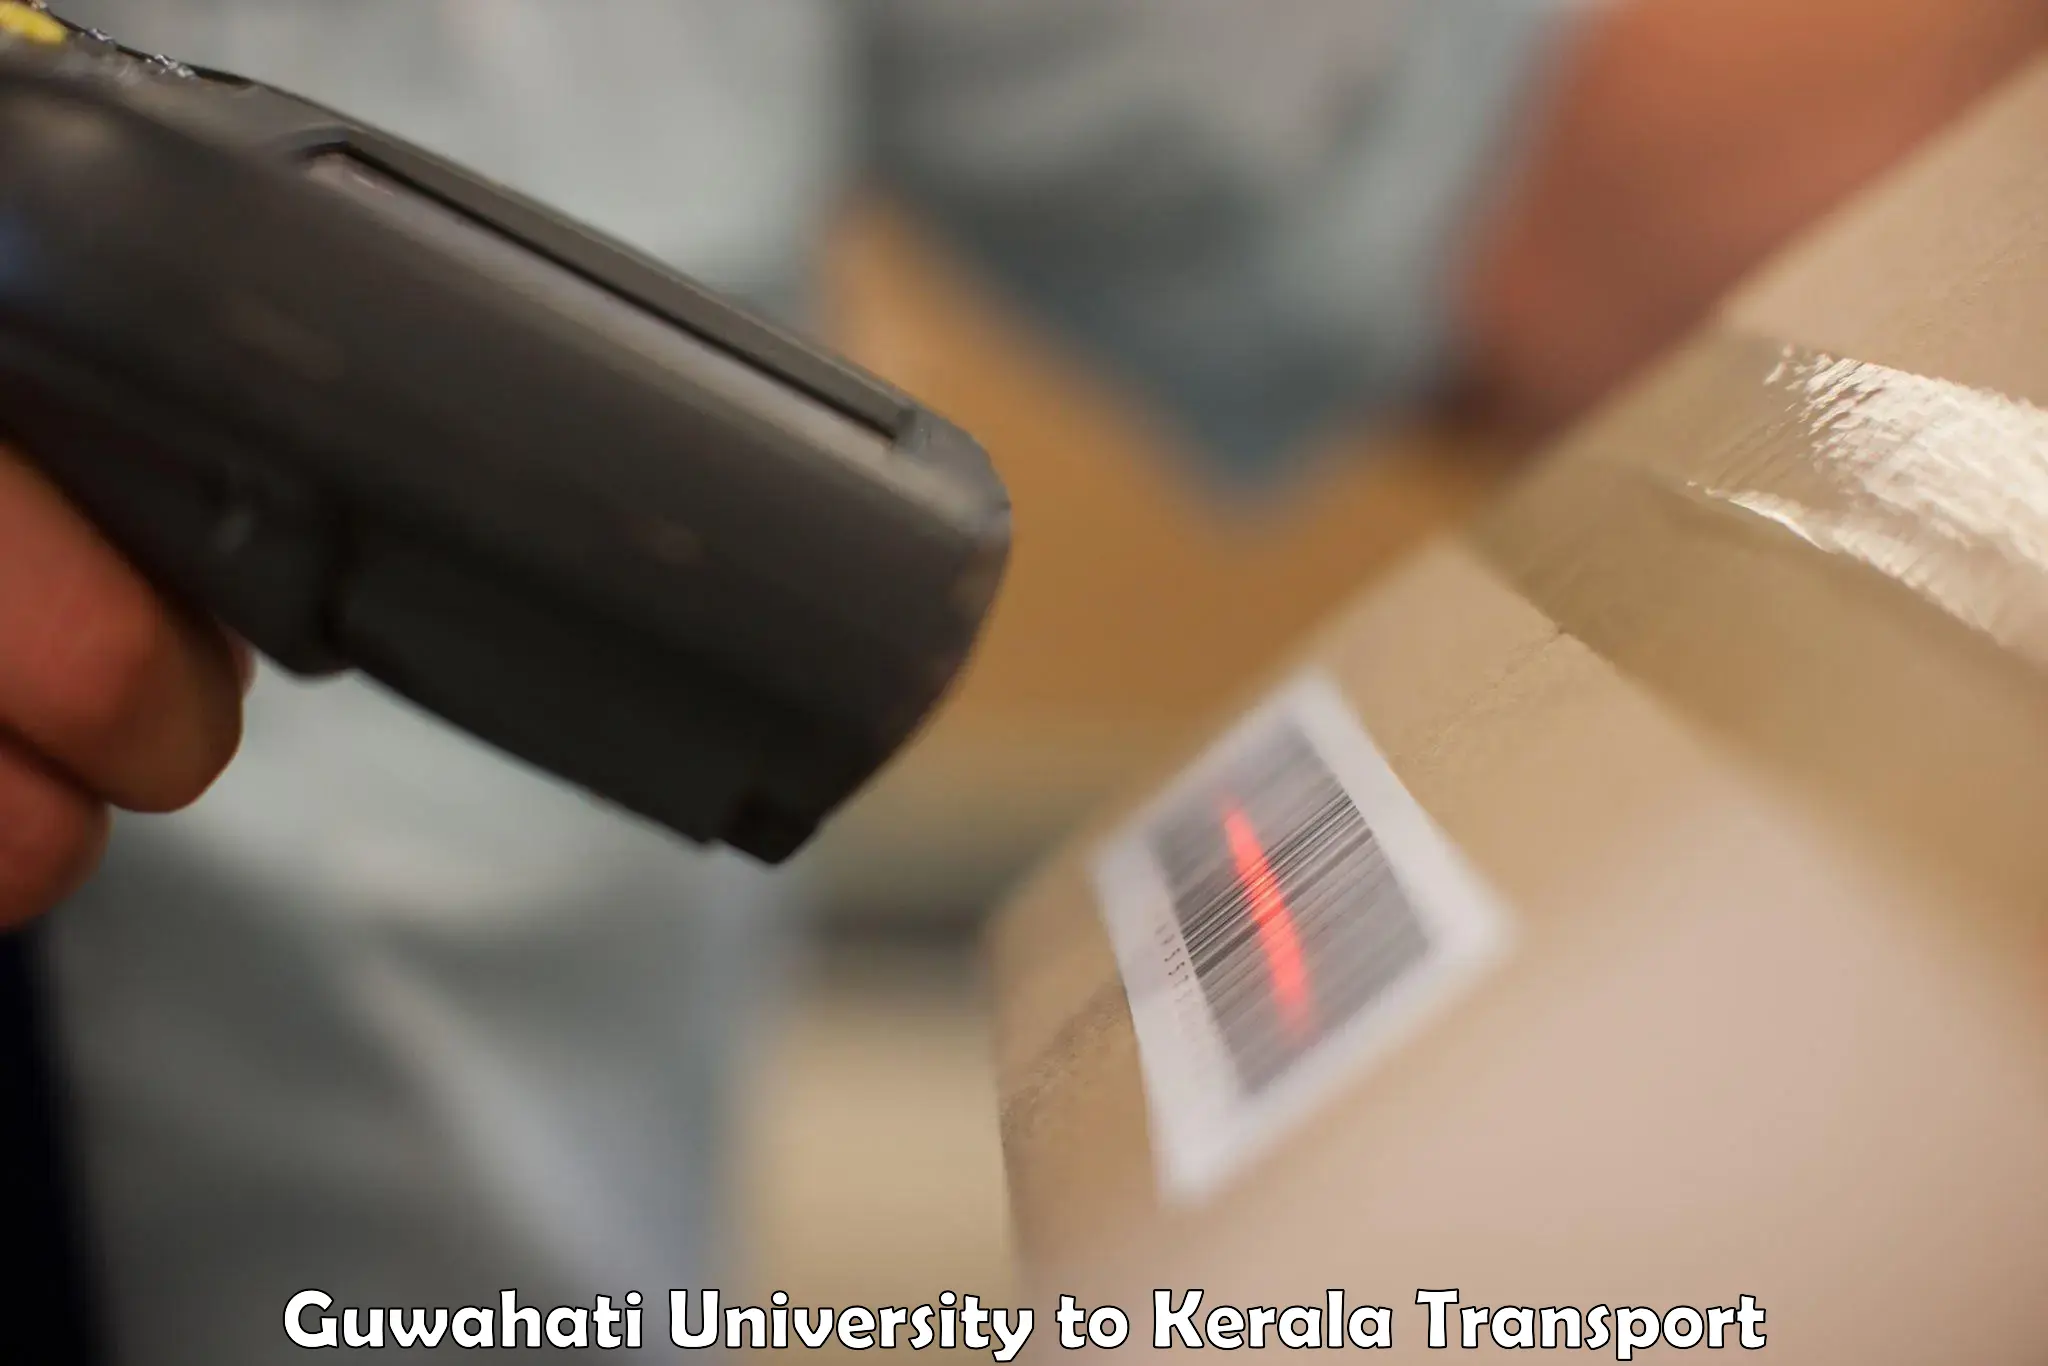 Nationwide transport services Guwahati University to Kerala